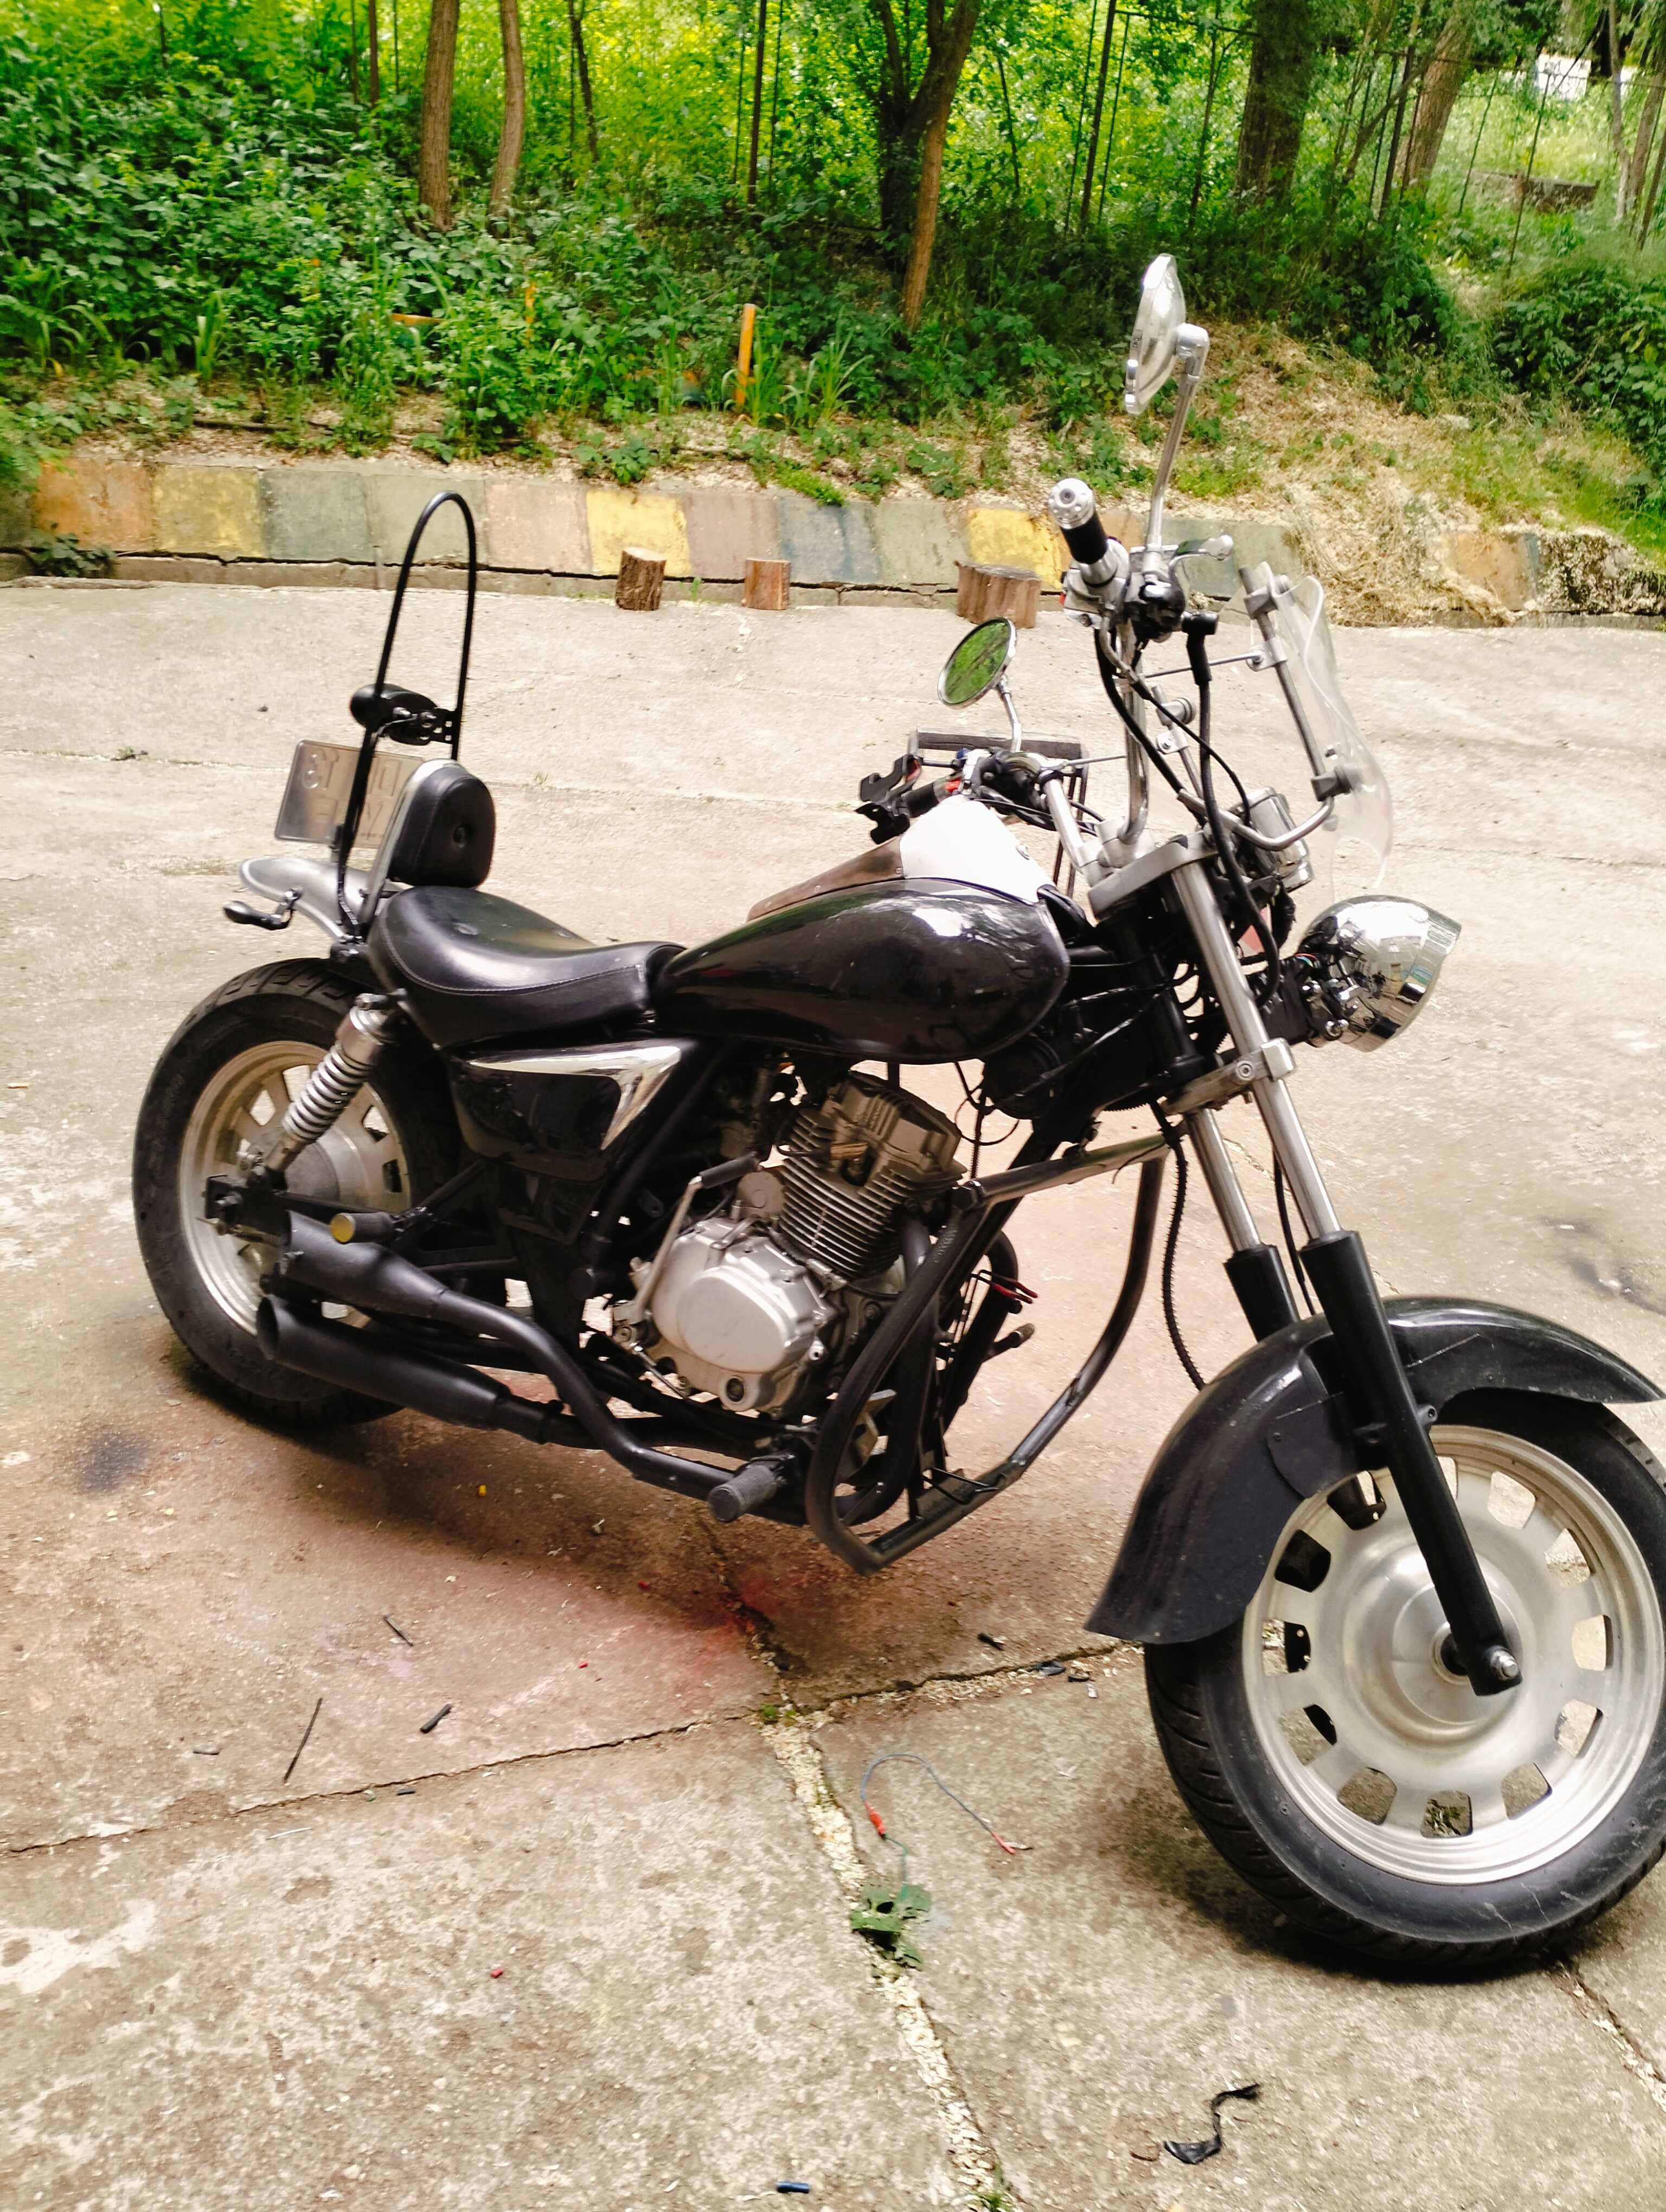 Motocicleta kinroad Xt 150 cc